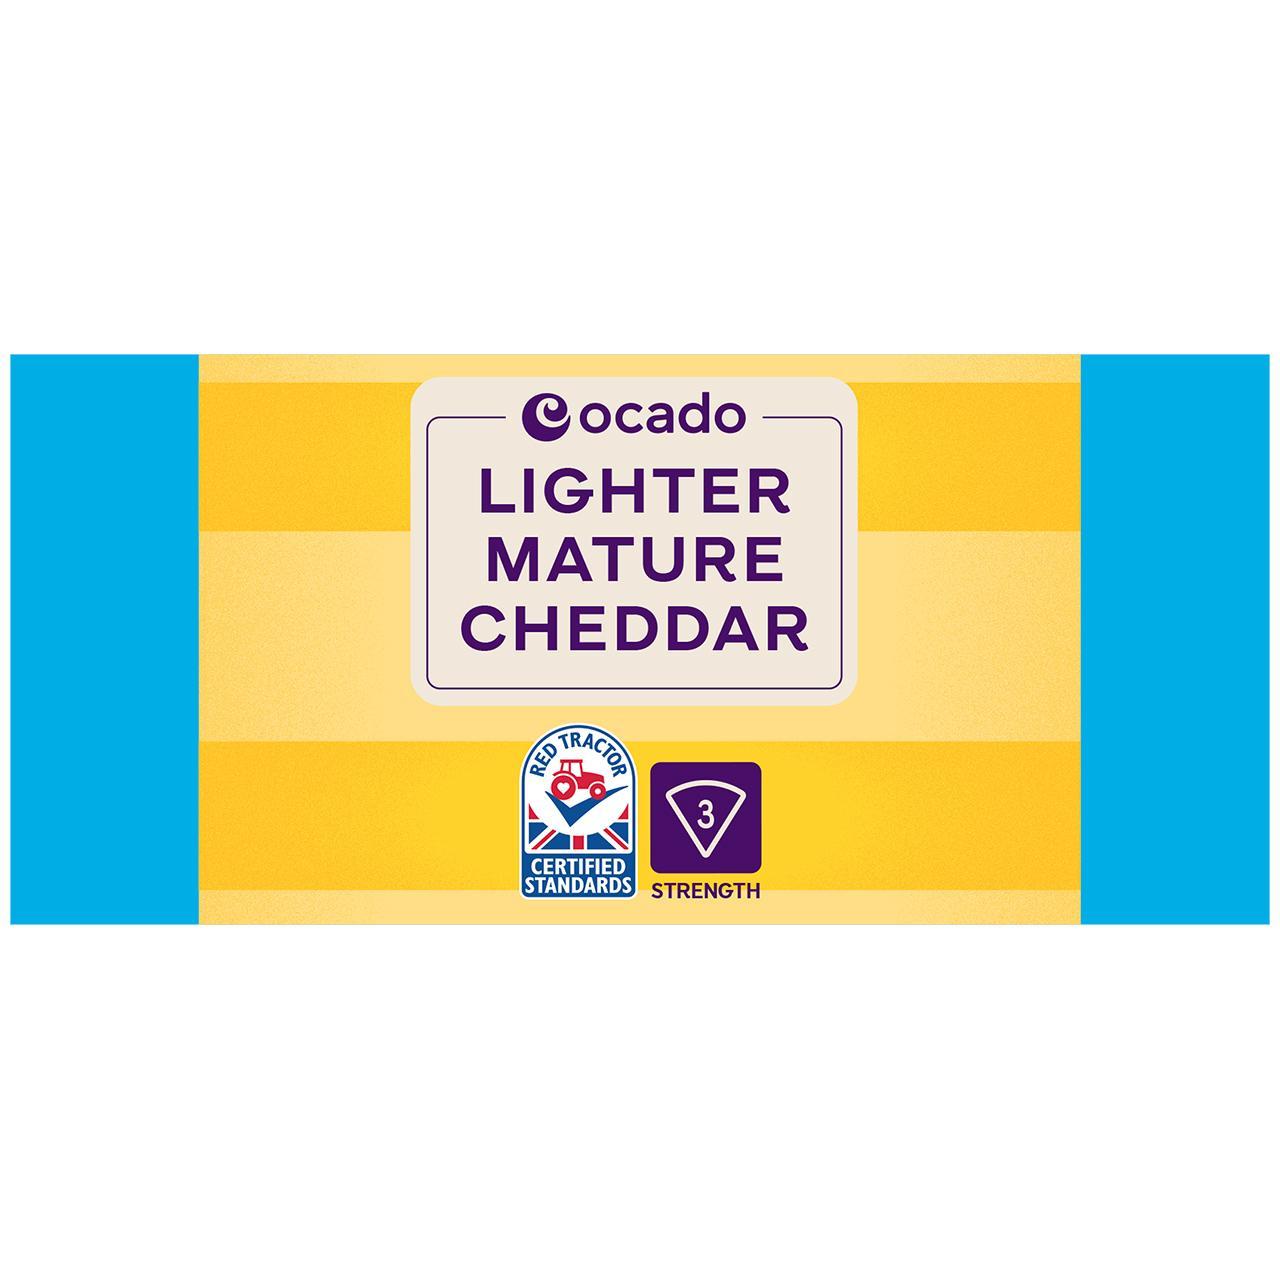 Ocado Lighter Mature Cheddar